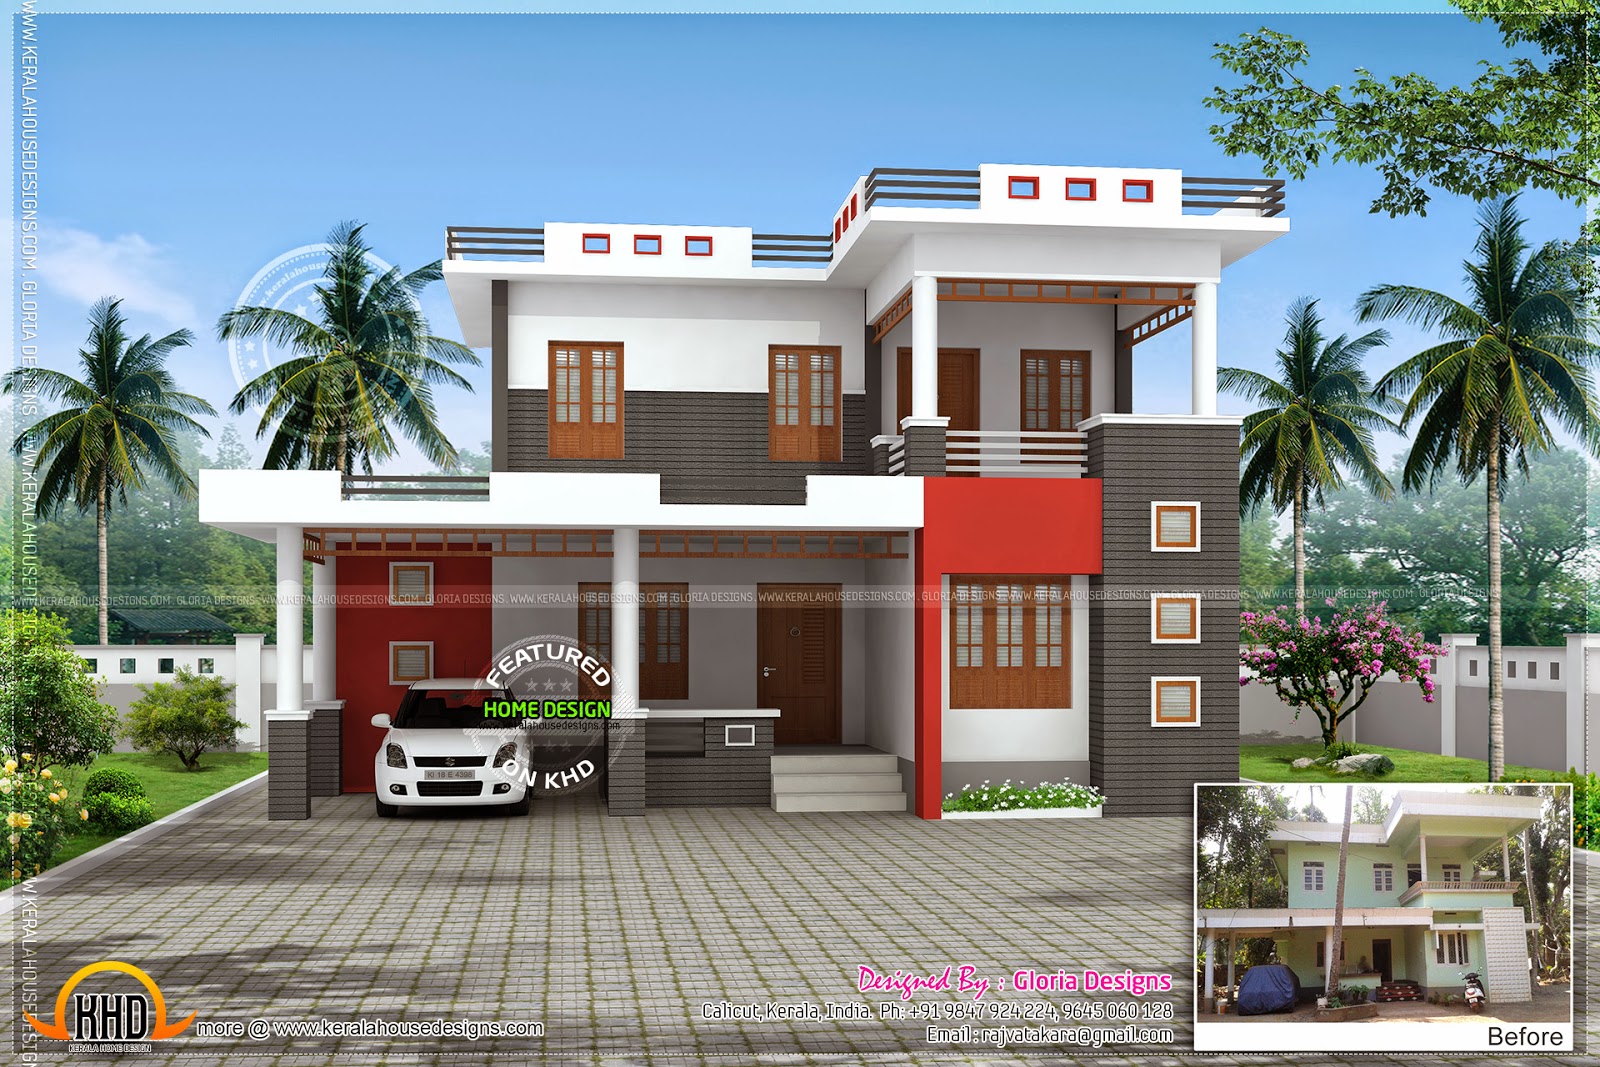 Renovation 3d model for an old house - Kerala home design ...